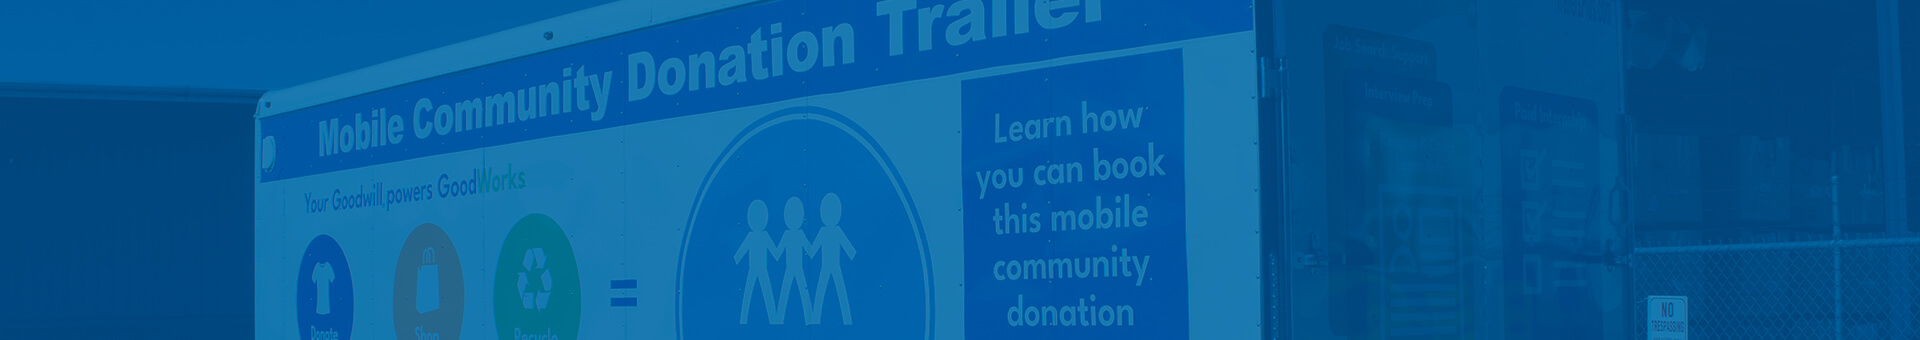 Mobile Donation Trailer